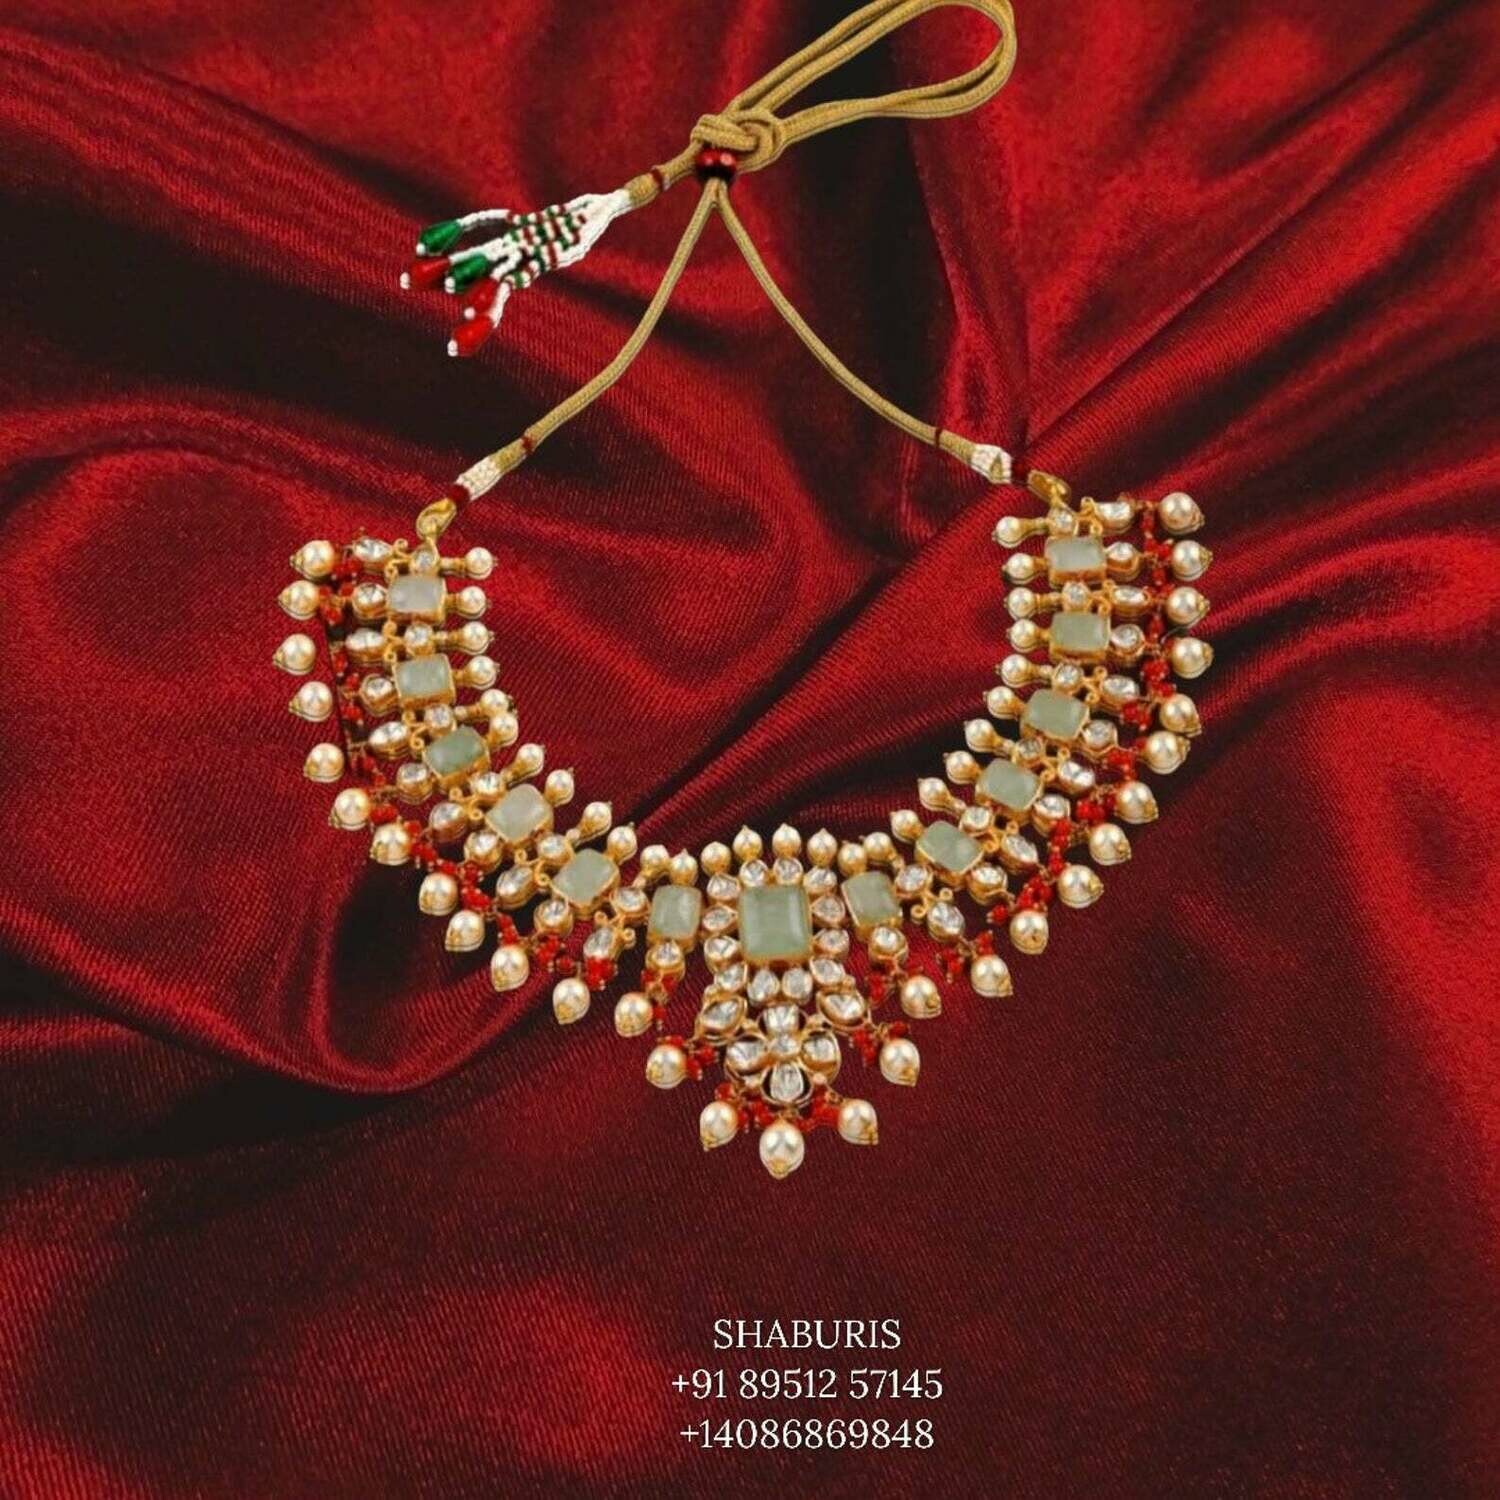 Polki Necklace gold plated jewelry diamond jewelry pure silver tiffany inspired jewelry in indian style-SHABURIS